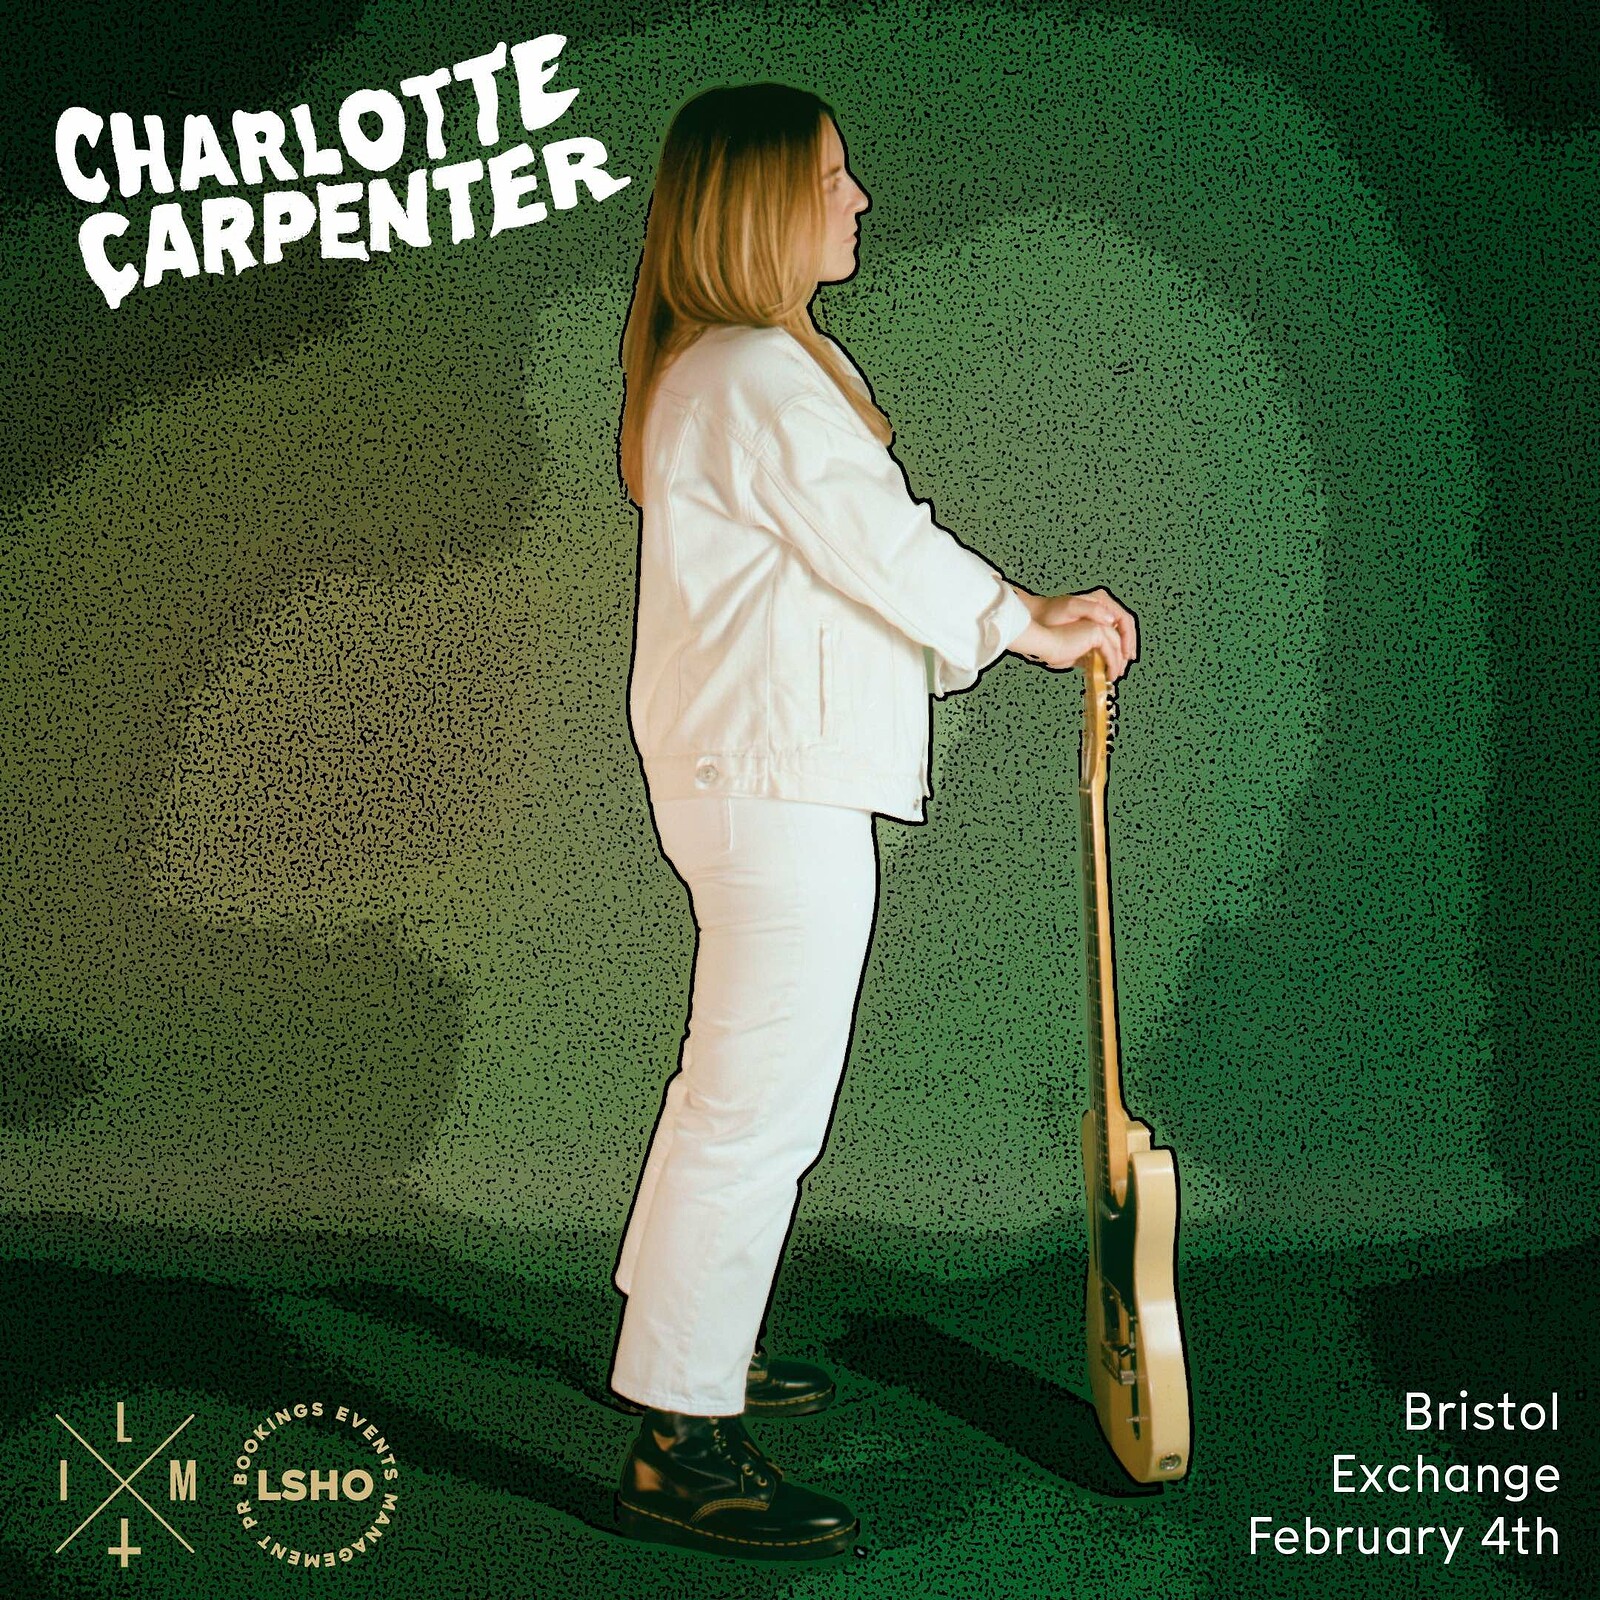 Charlotte Carpenter at Exchange